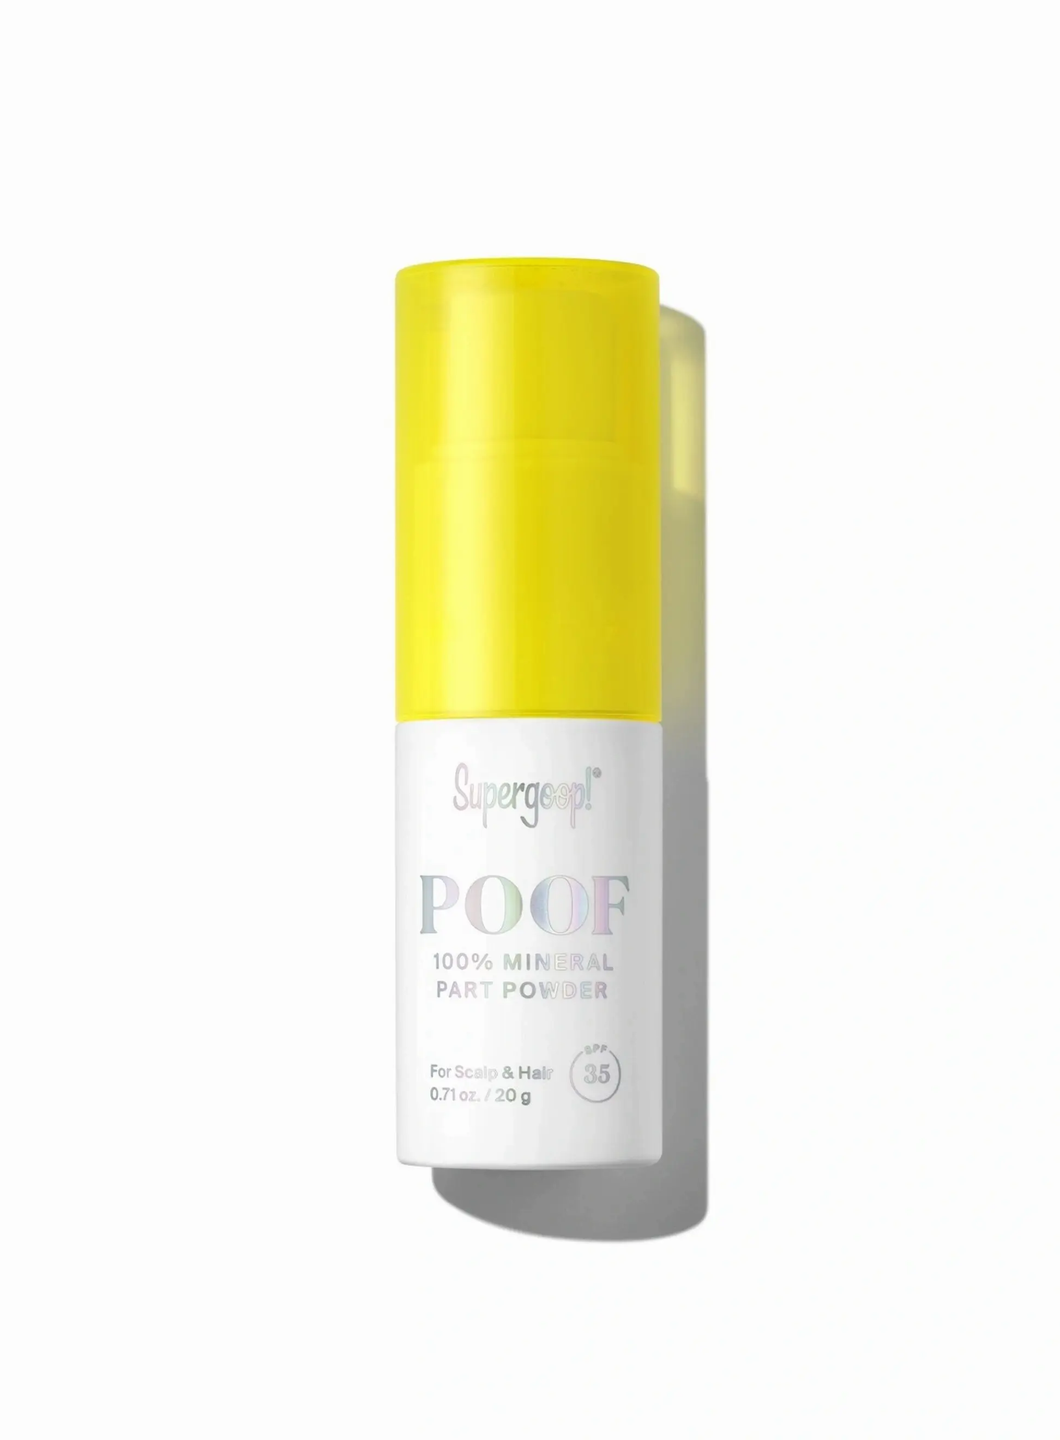 Poof 100% Mineral Part Powder SPF 35 .71 oz. / 20 g